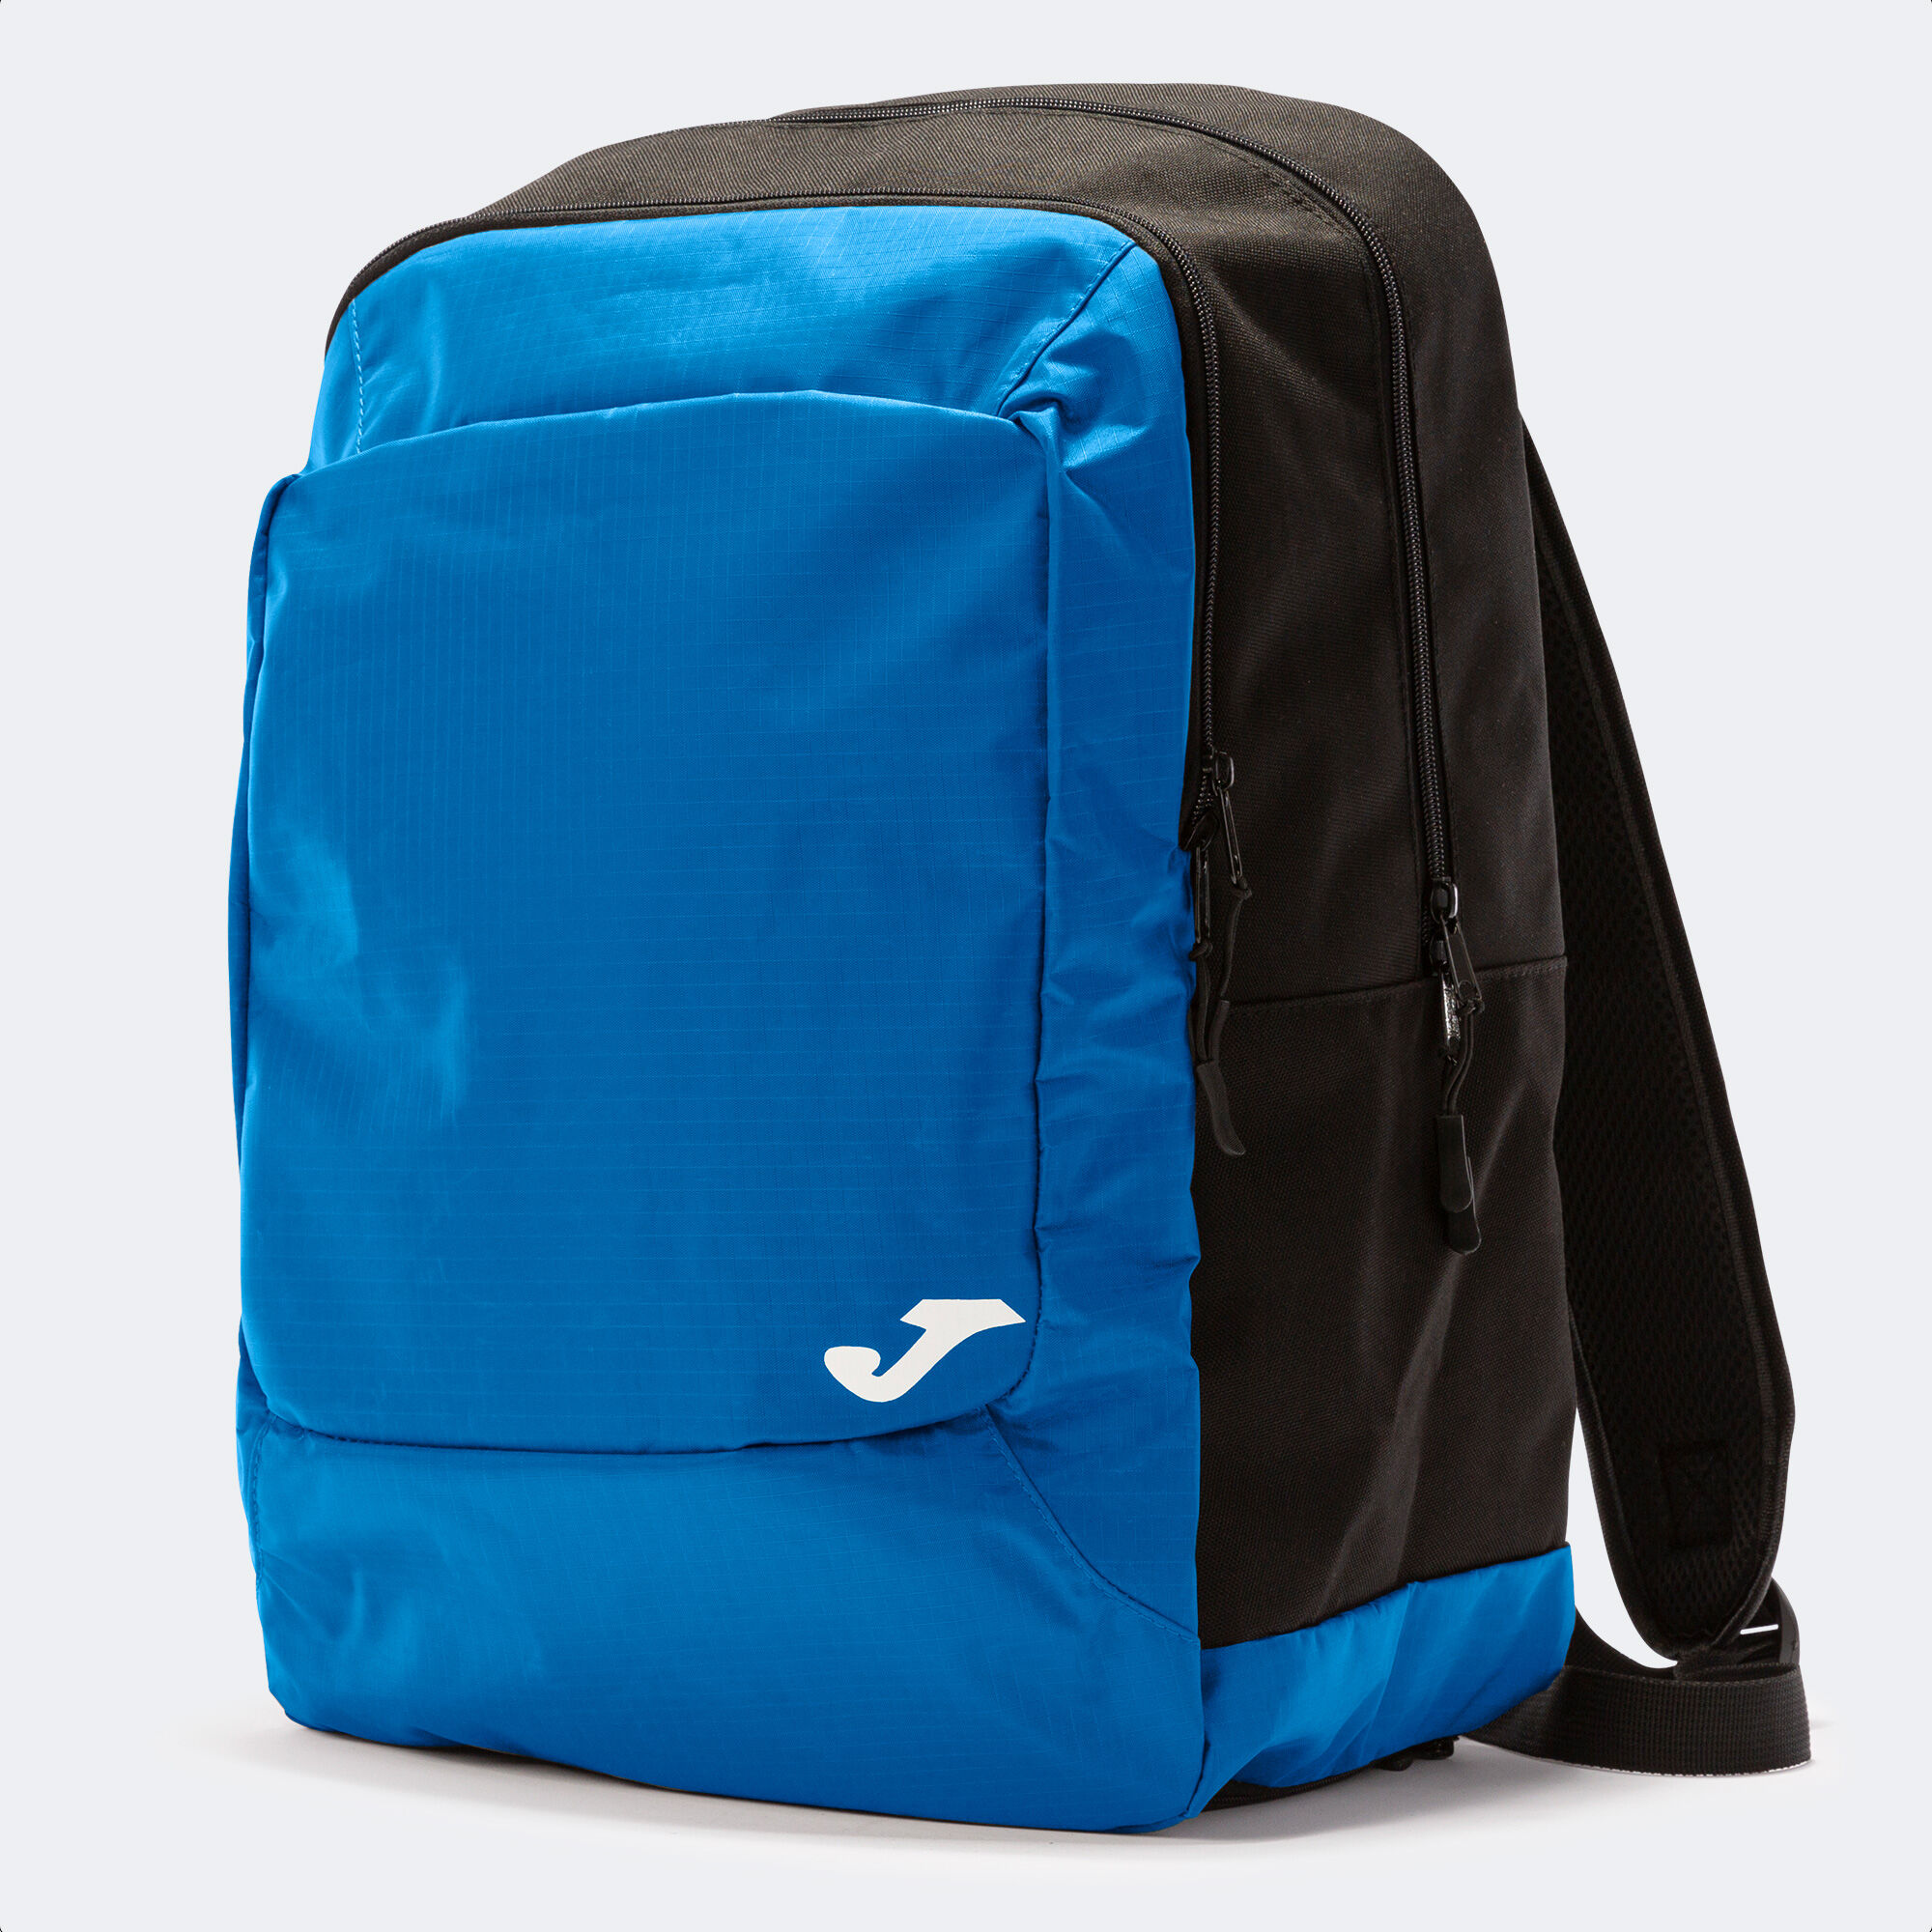 Backpack - shoe bag Team black fluorescent turquoise